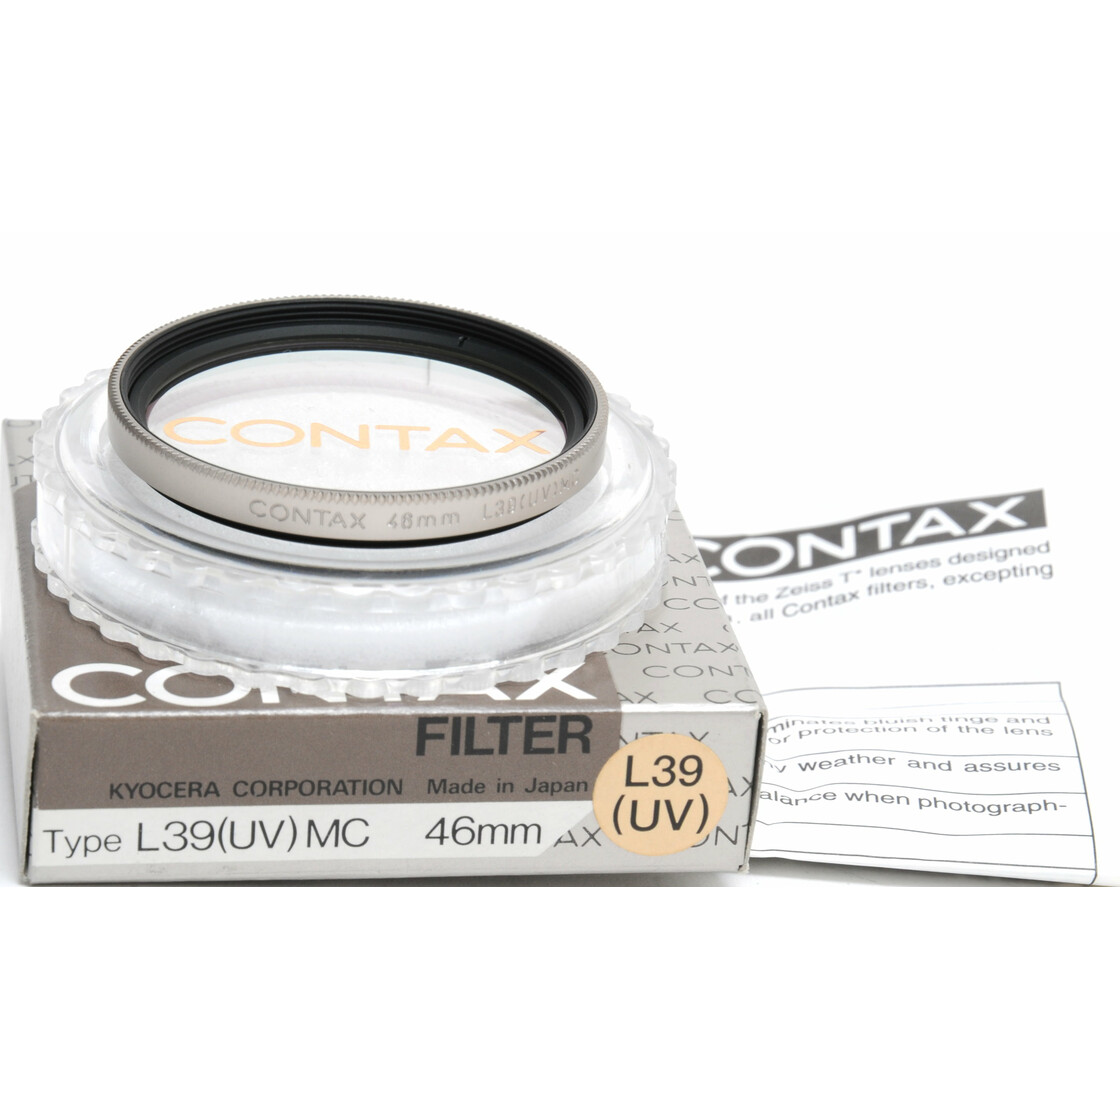 Contax Filter Type L39 UV MC 46mm original boxed Mint Condition